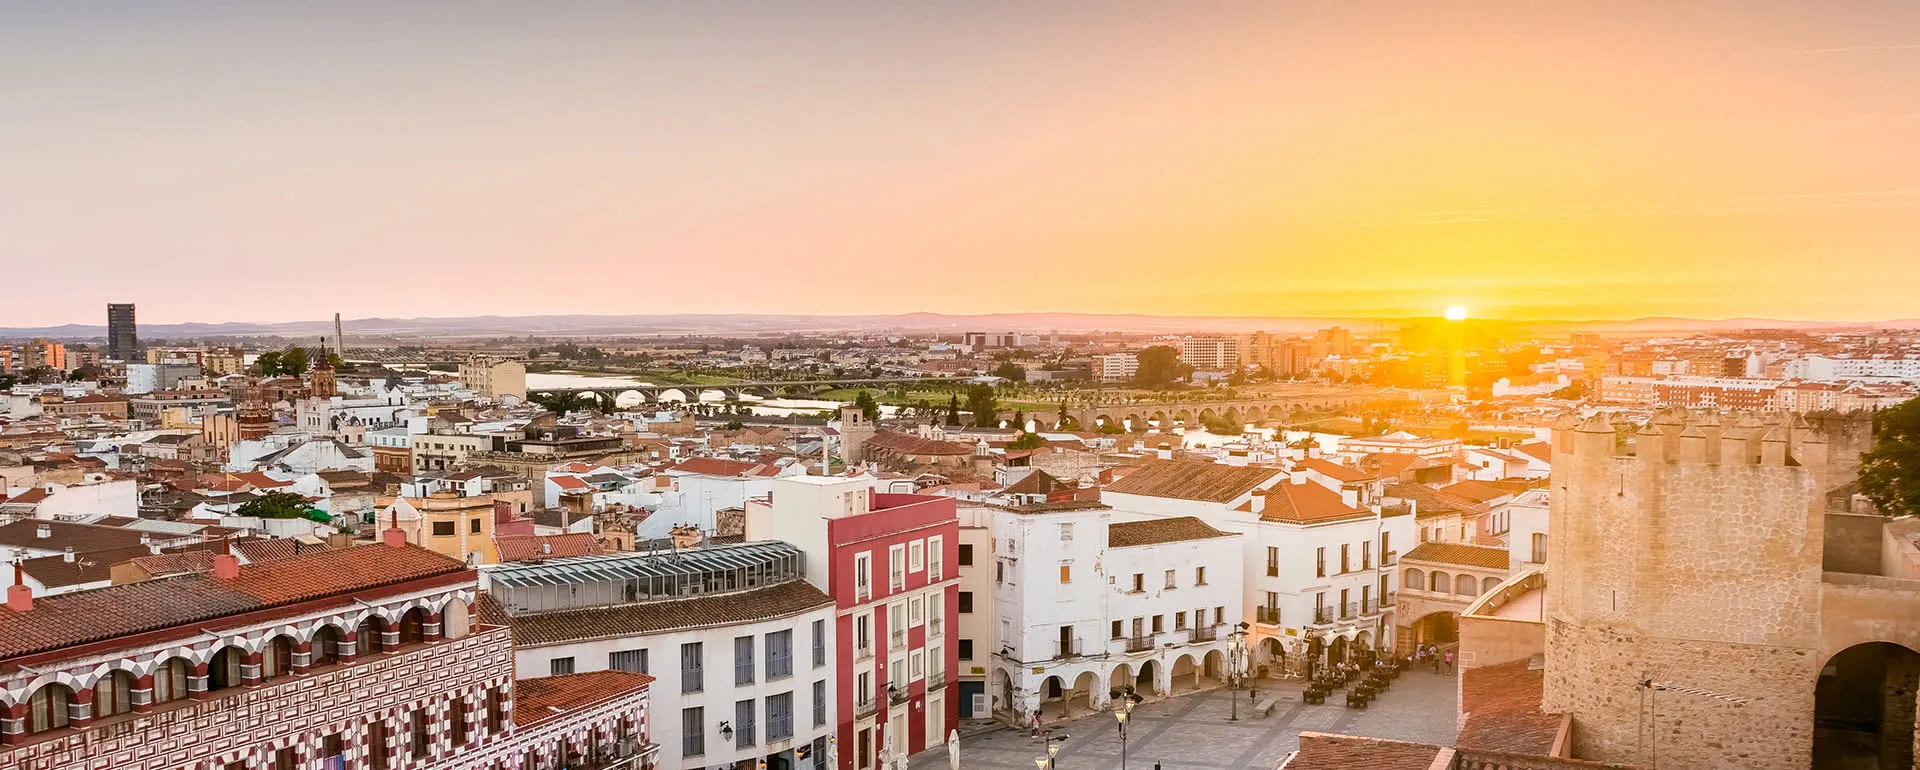 Badajoz - the destination for company trips